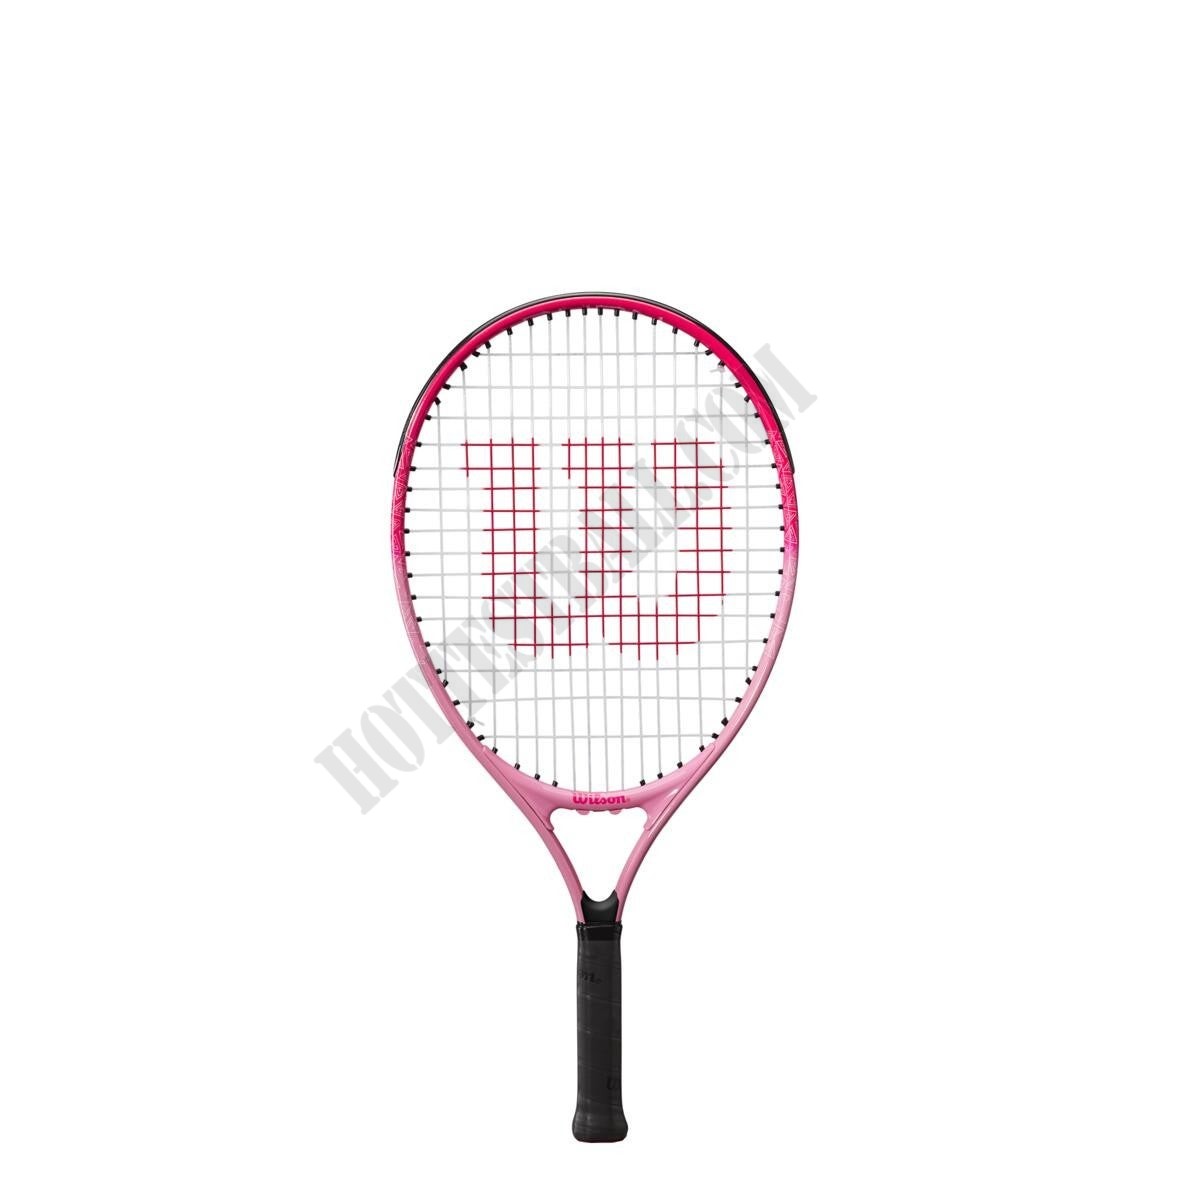 Burn Pink 21 Tennis Racket - Wilson Discount Store - Burn Pink 21 Tennis Racket - Wilson Discount Store